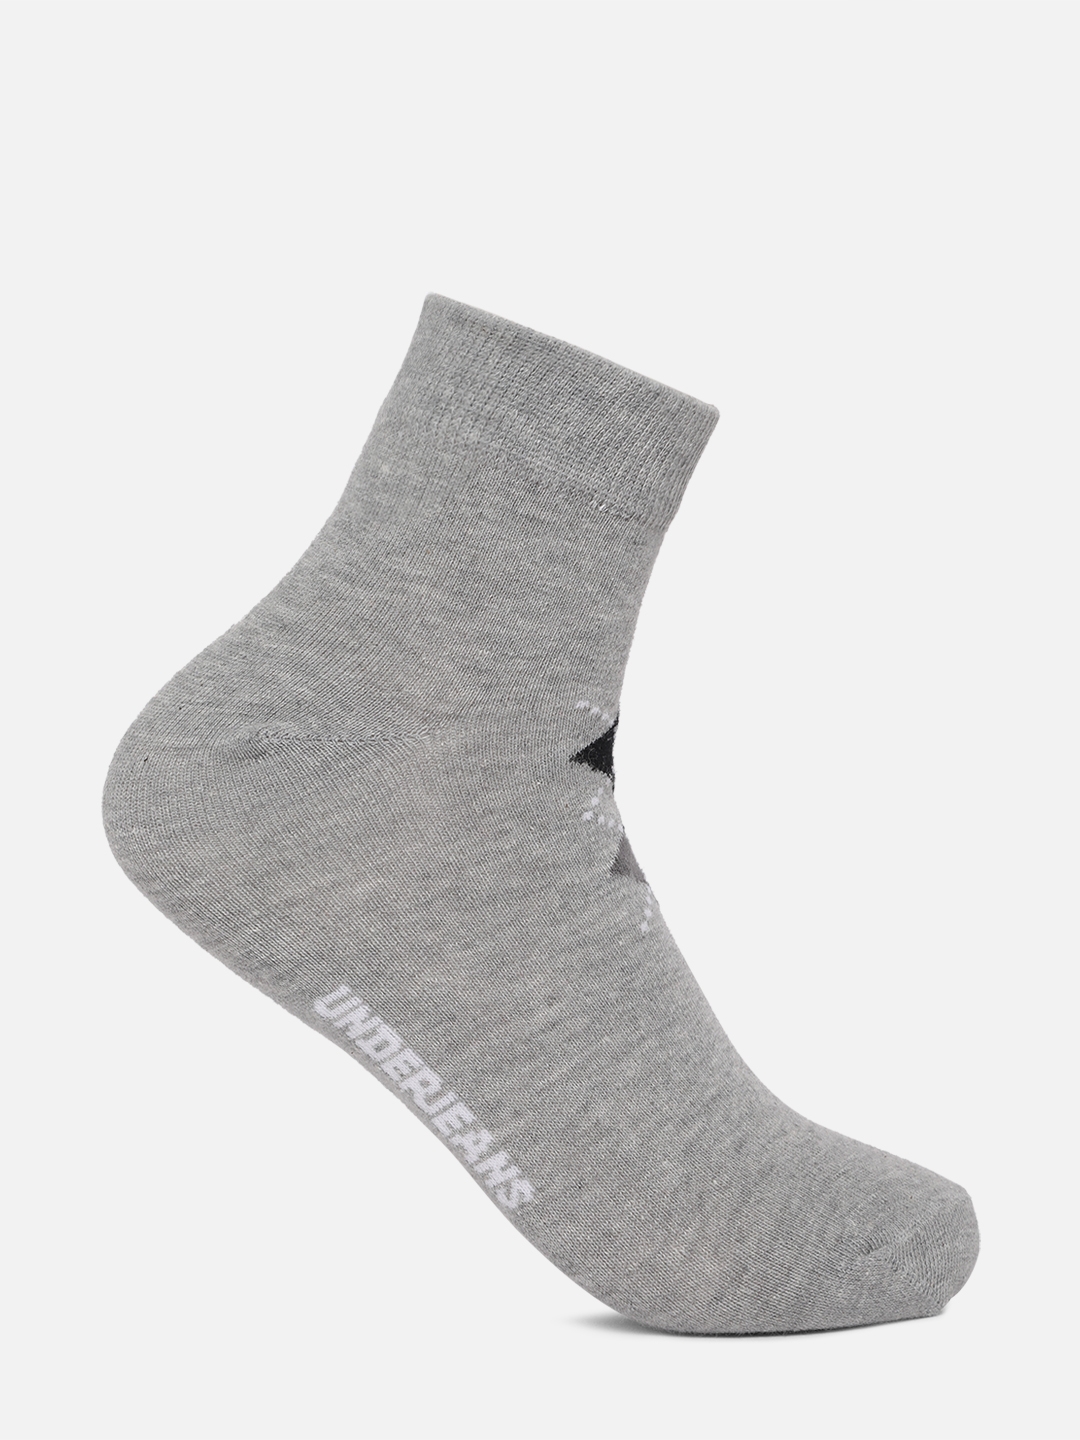 spykar | Underjeans Men Assorted Ankle length (Non terry) Socks Pack of 2 1